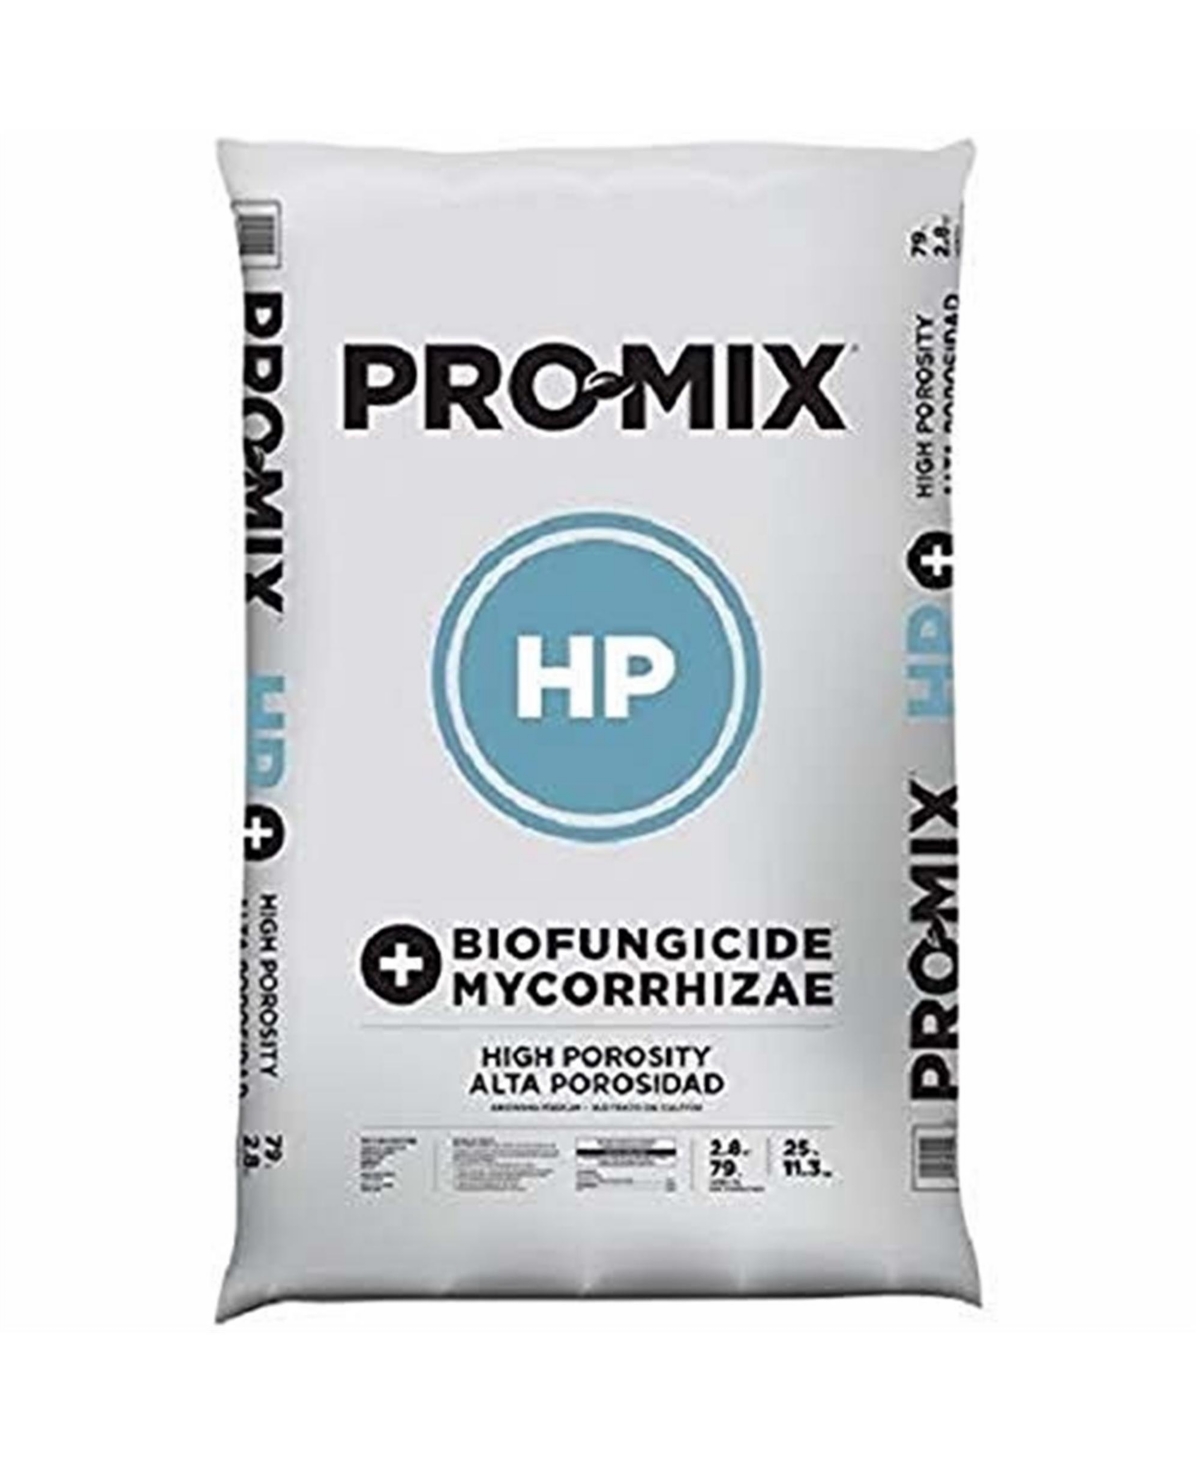 Pro-mix Hp Biofungicide/Mycorrhizae Mix - Multi